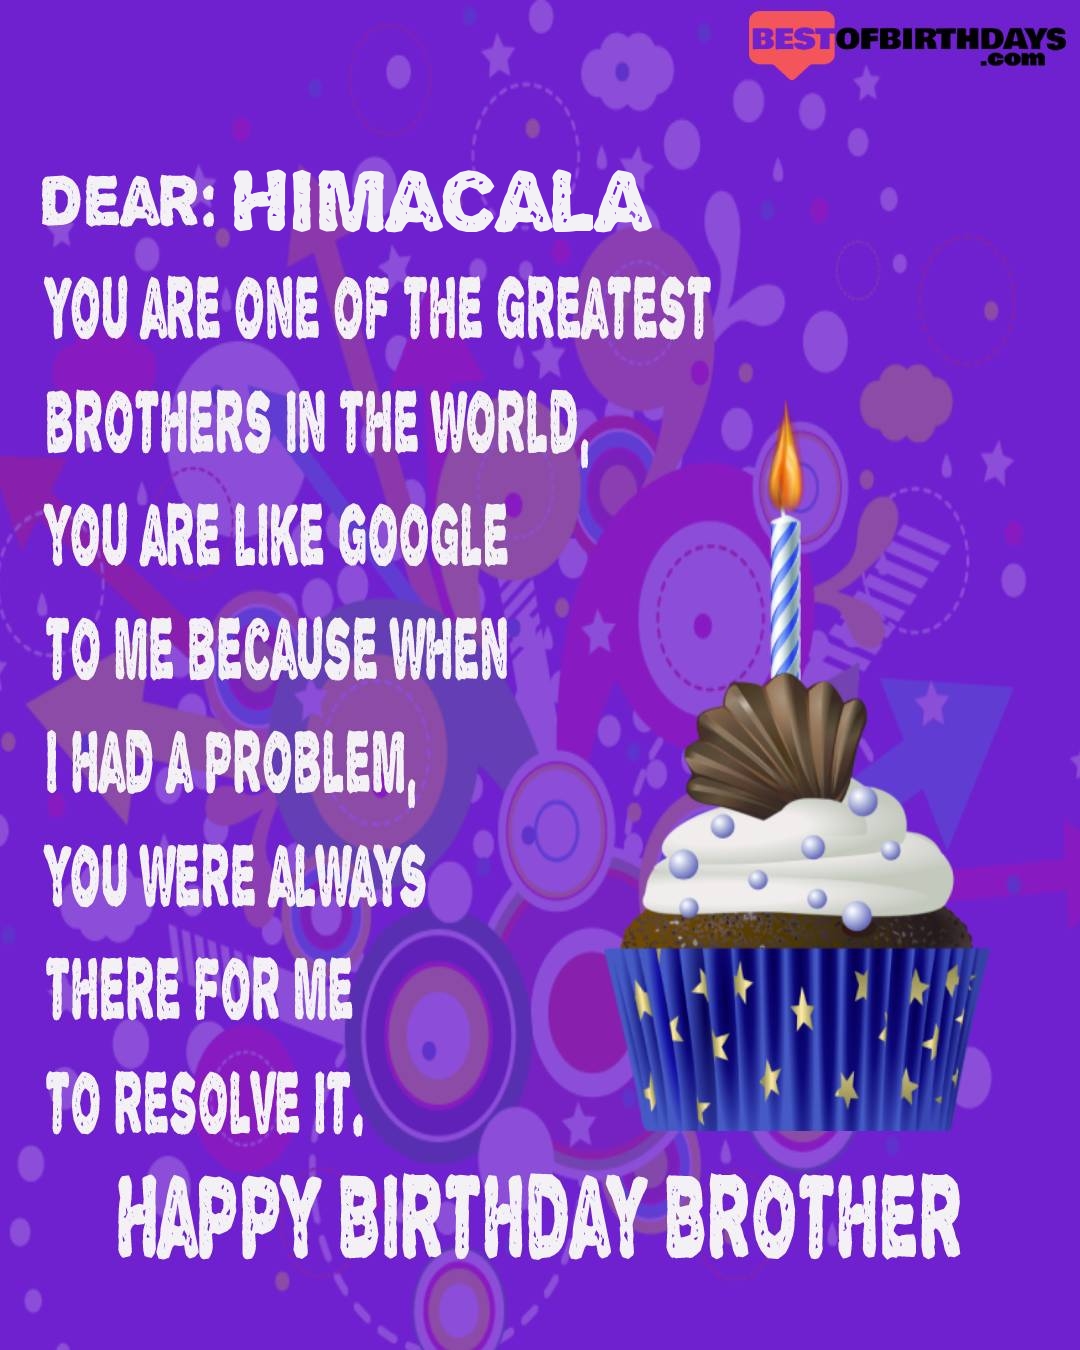 Happy birthday himacala bhai brother bro